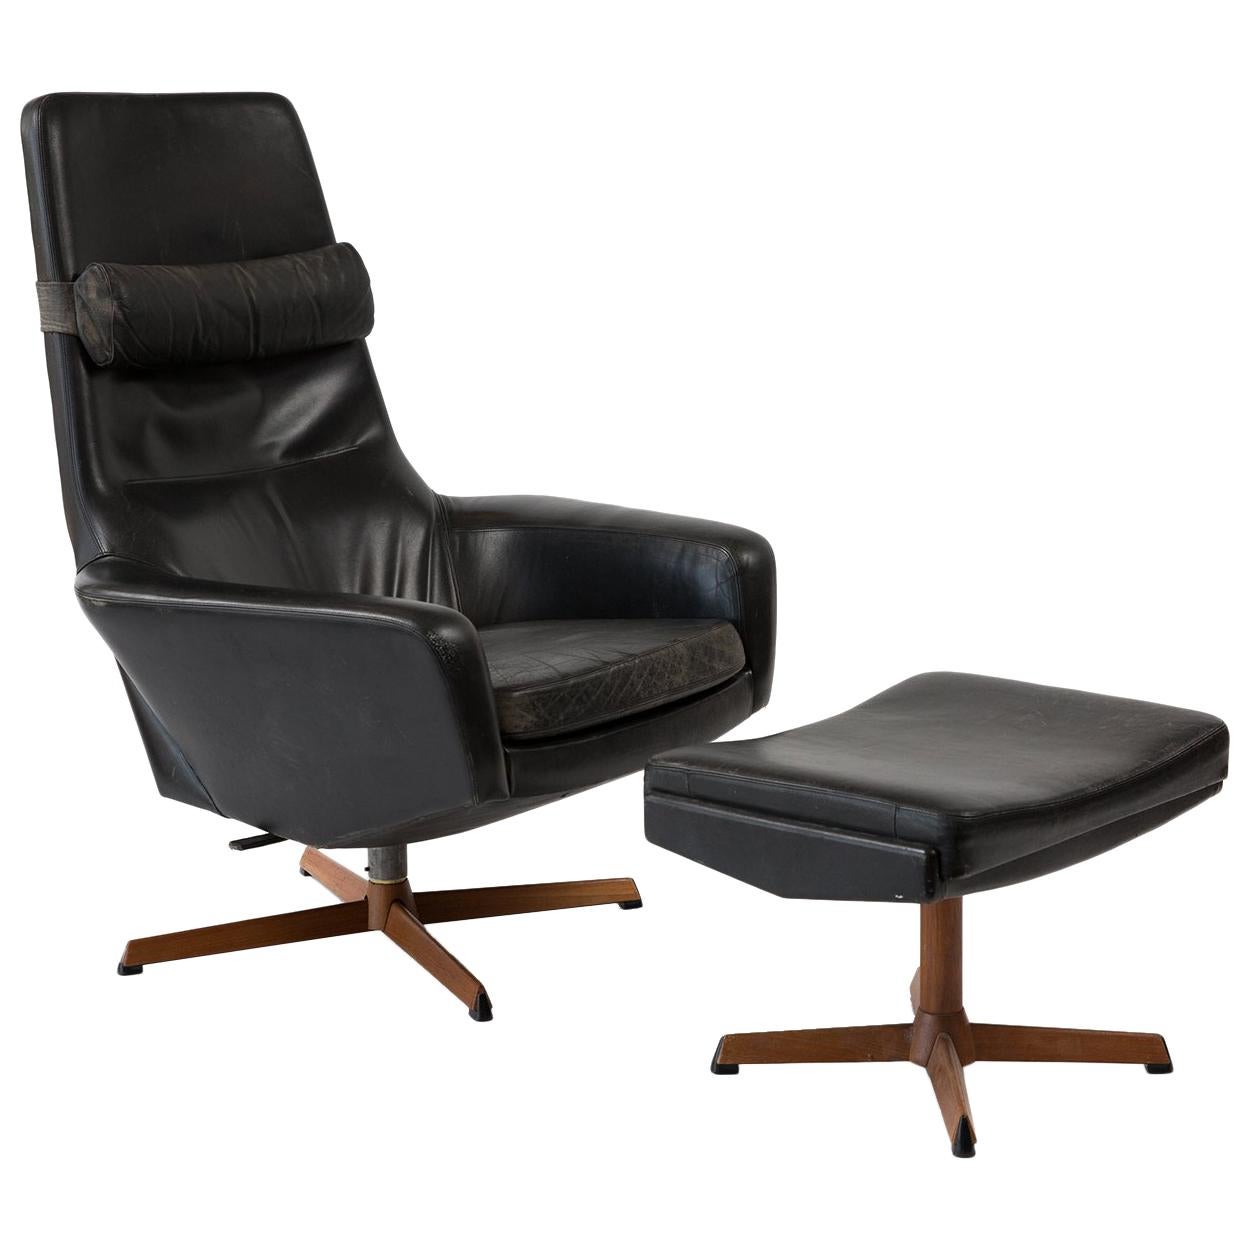 Kofod Larsen Leather Teak Lounge Chair and Ottoman